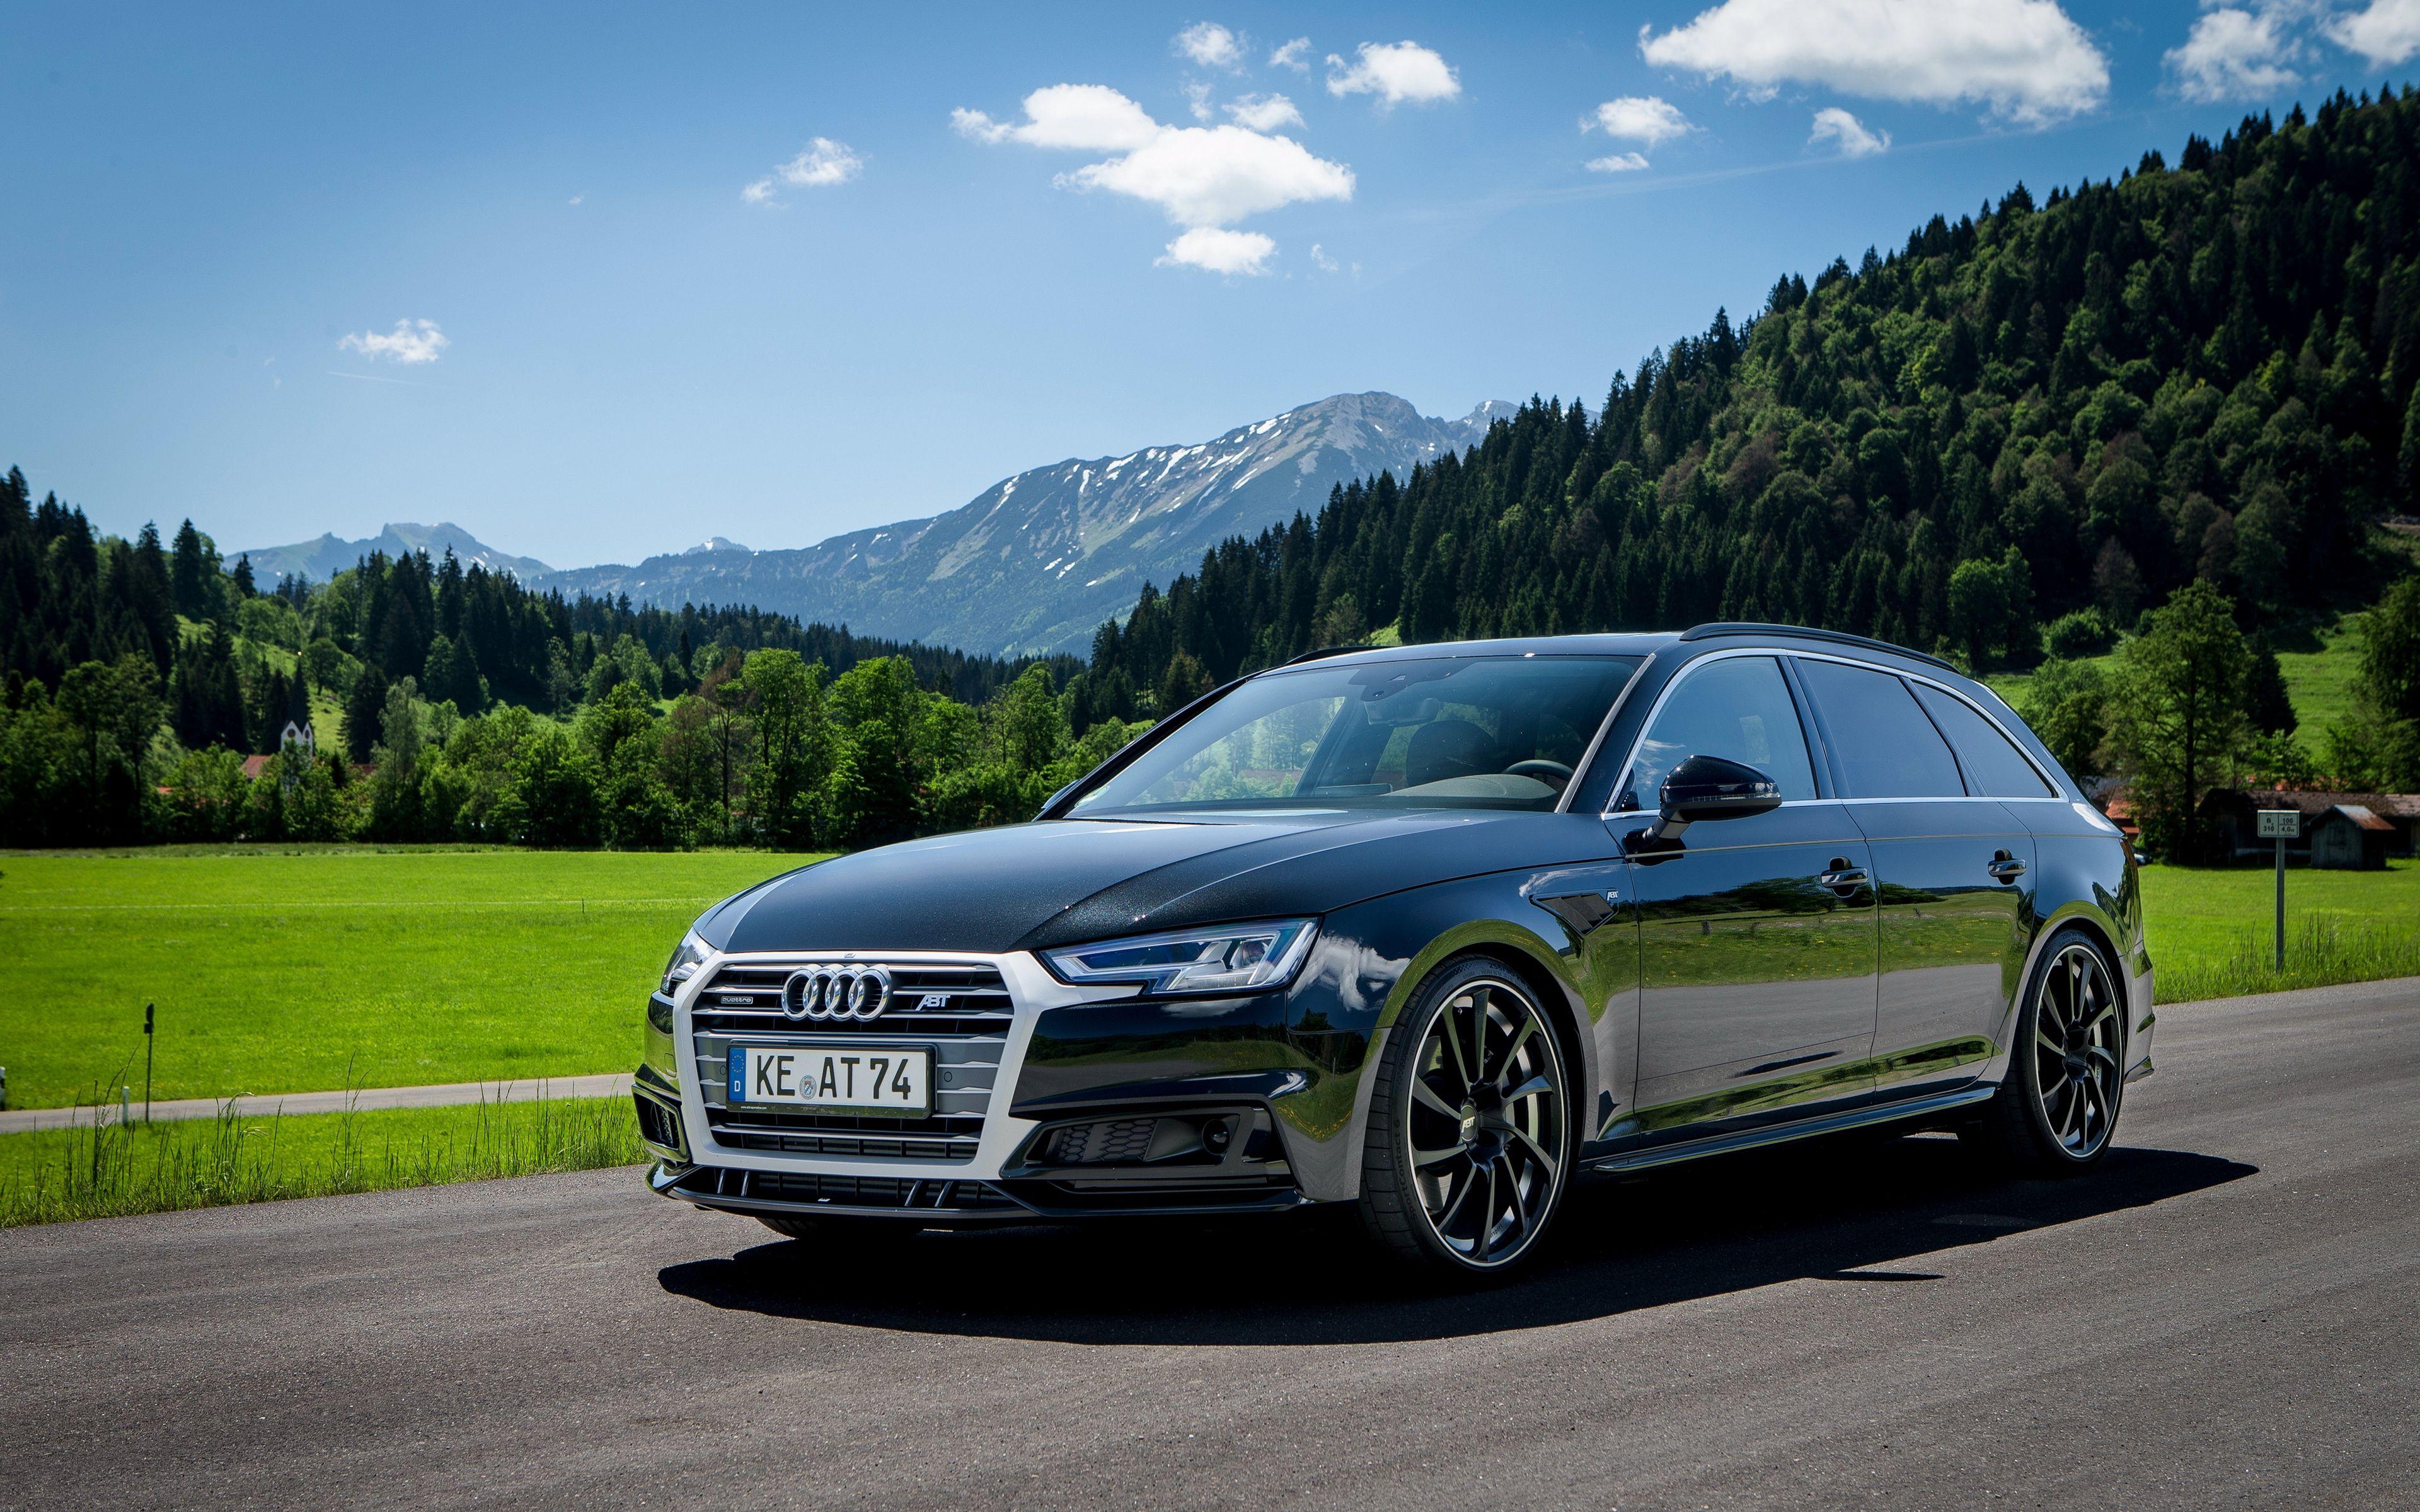 Audi Wallpapers Top Free Audi Backgrounds Wallpaperaccess